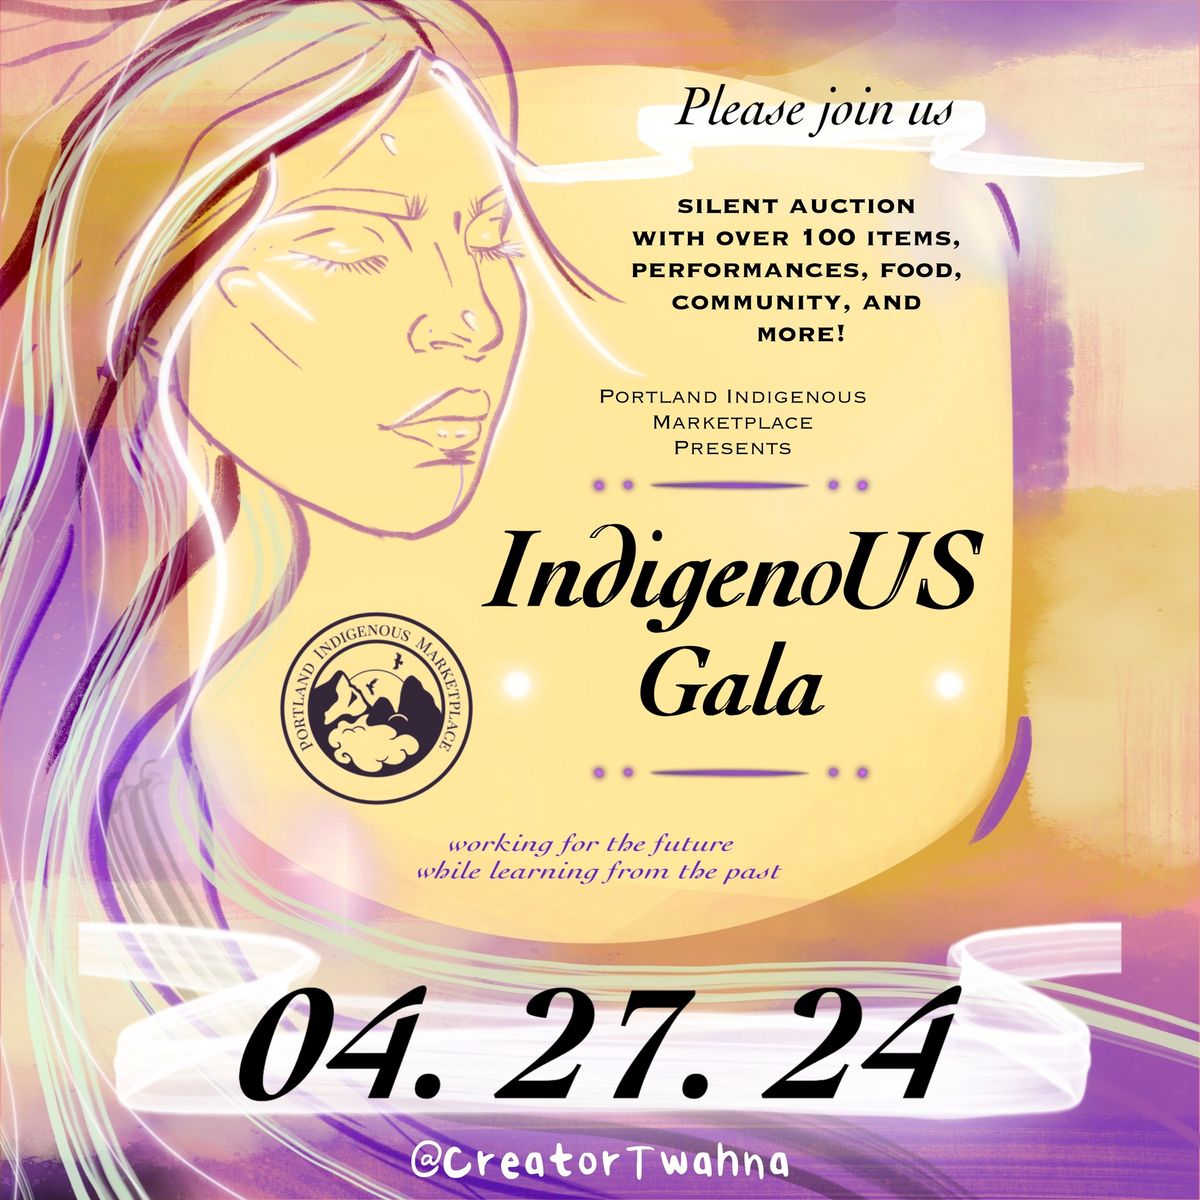 IndigenoUS Gala